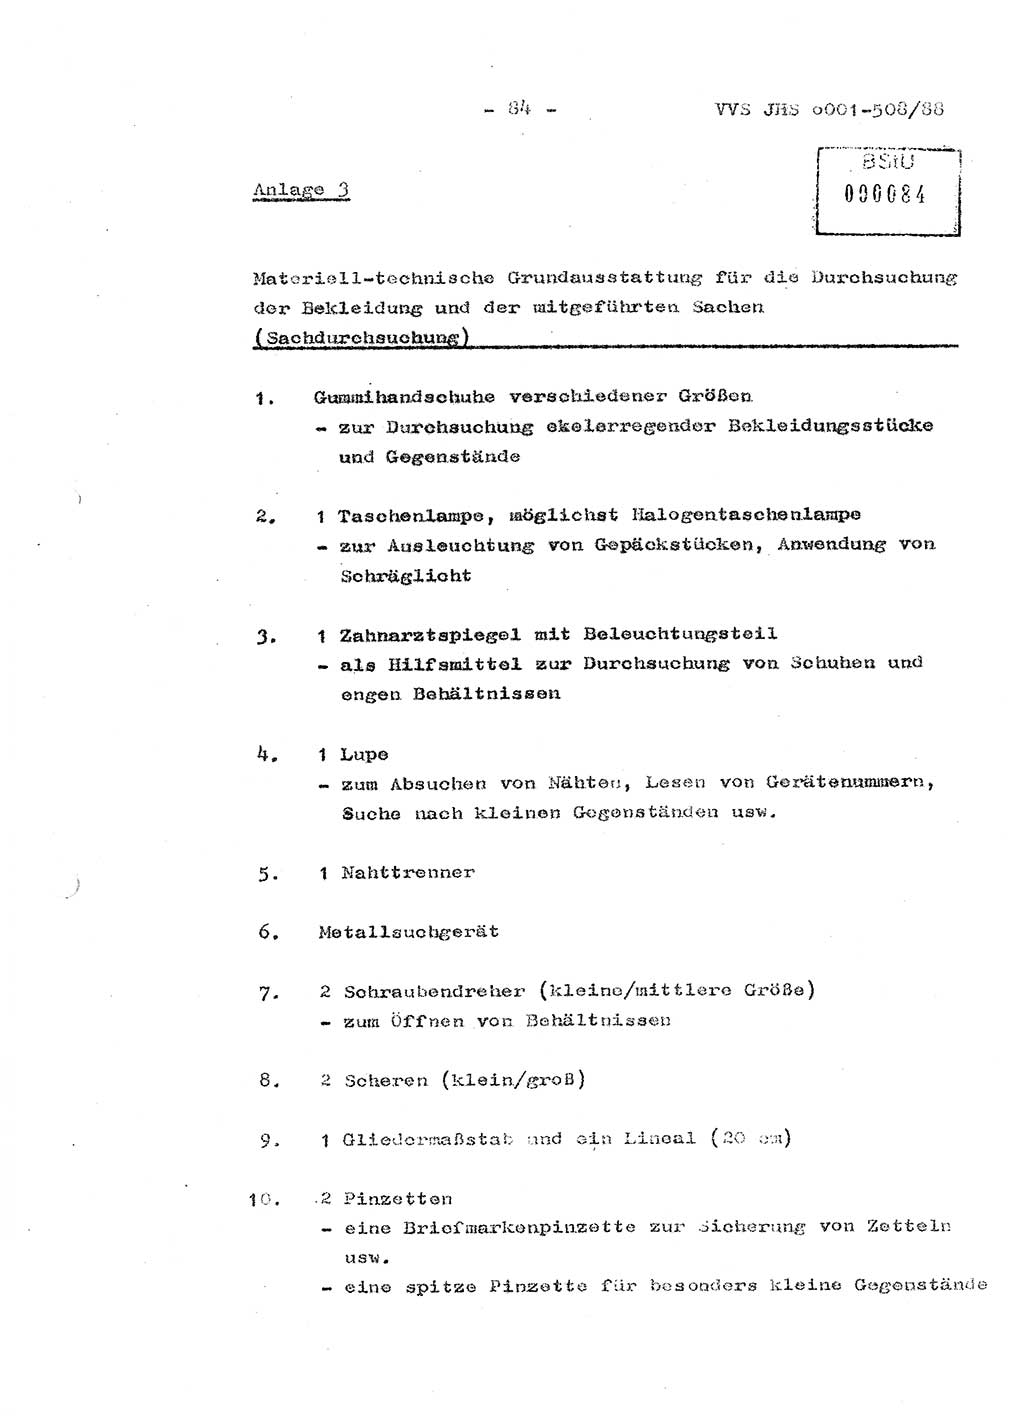 Diplomarbeit Hauptmann Christian Kätzel (Abt. ⅩⅣ), Ministerium für Staatssicherheit (MfS) [Deutsche Demokratische Republik (DDR)], Juristische Hochschule (JHS), Vertrauliche Verschlußsache (VVS) o001-508/88, Potsdam 1988, Blatt 84 (Dipl.-Arb. MfS DDR JHS VVS o001-508/88 1988, Bl. 84)